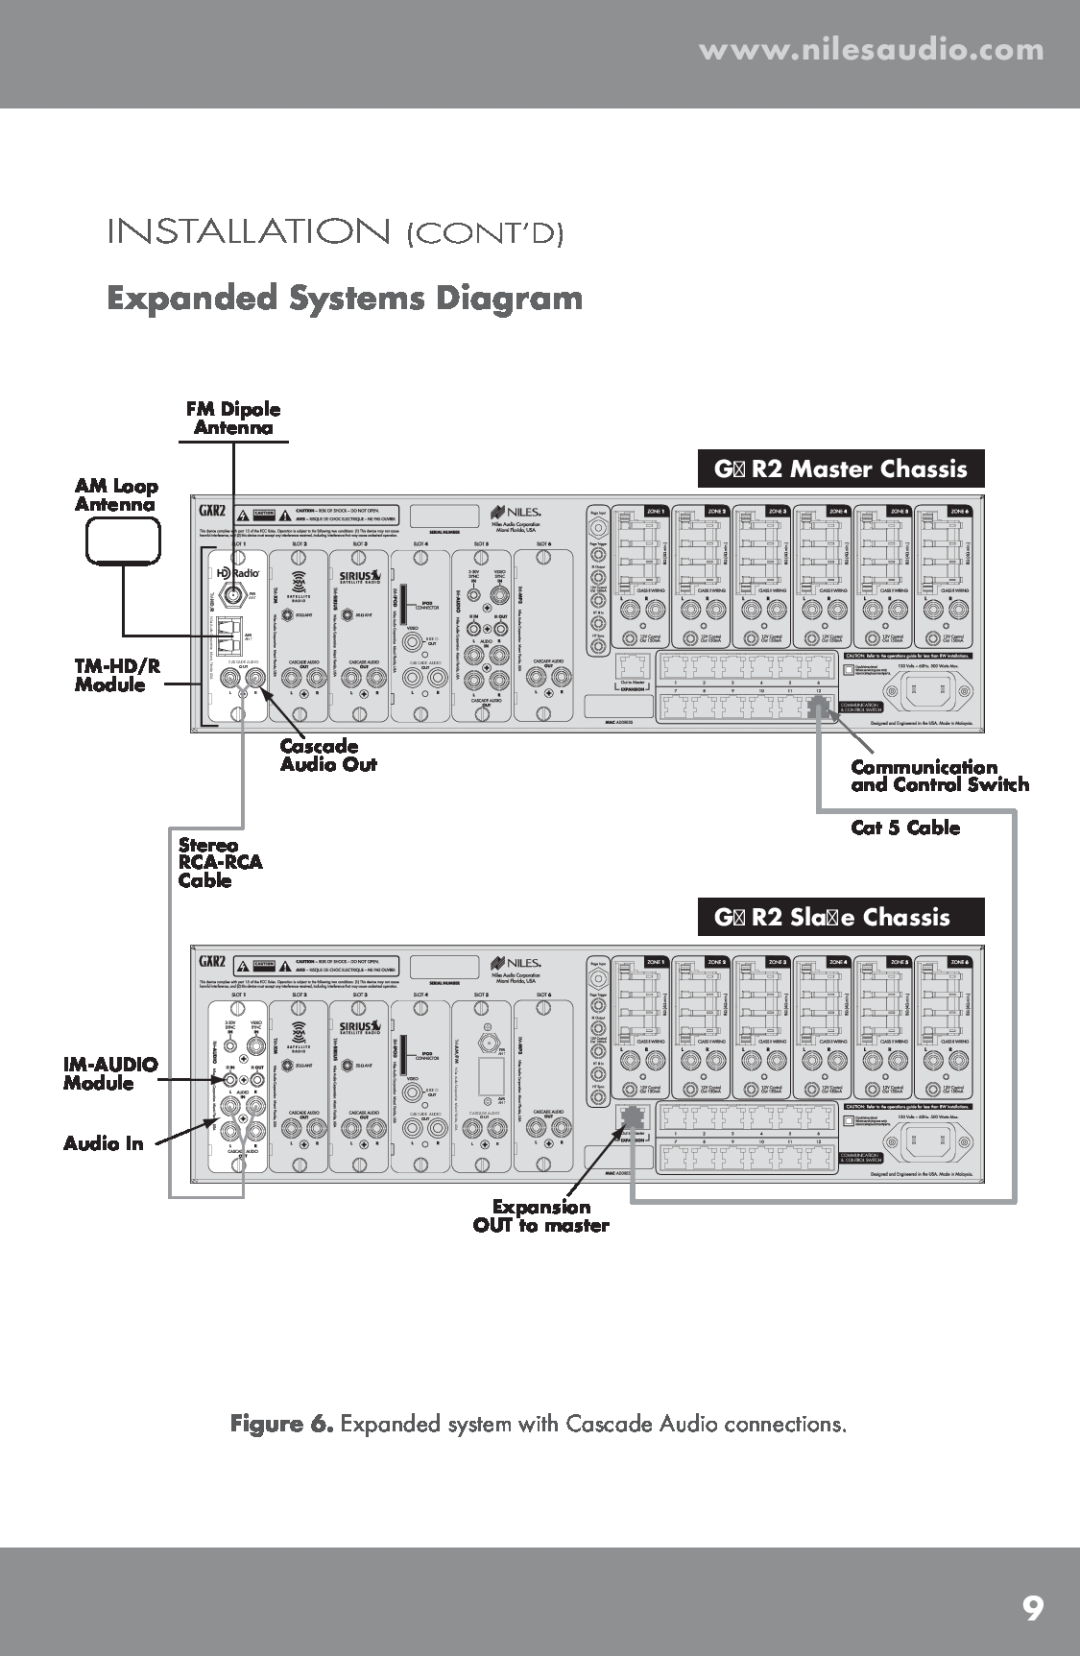 Niles Audio TM-HD/R manual Expanded Systems Diagram, Installation Cont’D, 93.BTUFS$IBTTJT, 934MBWF$IBTTJT 